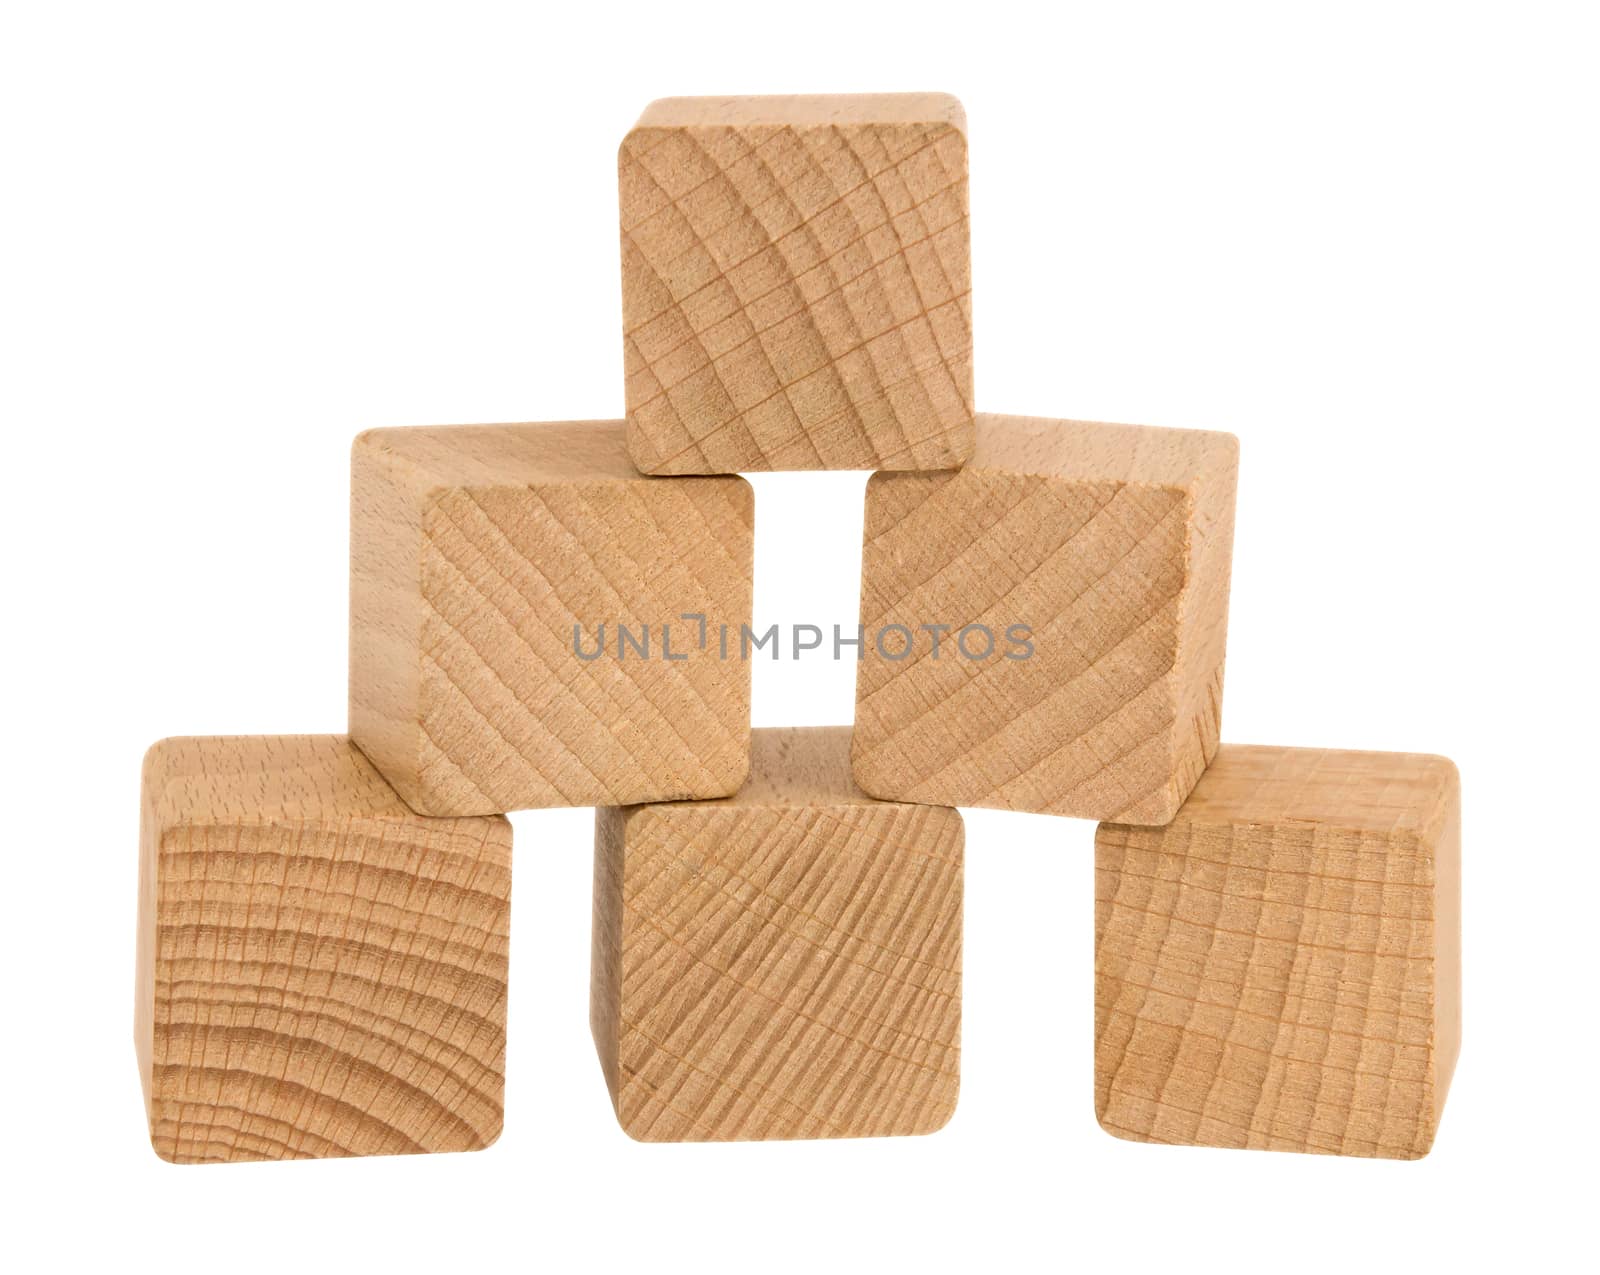 Wooden blocks by Venakr